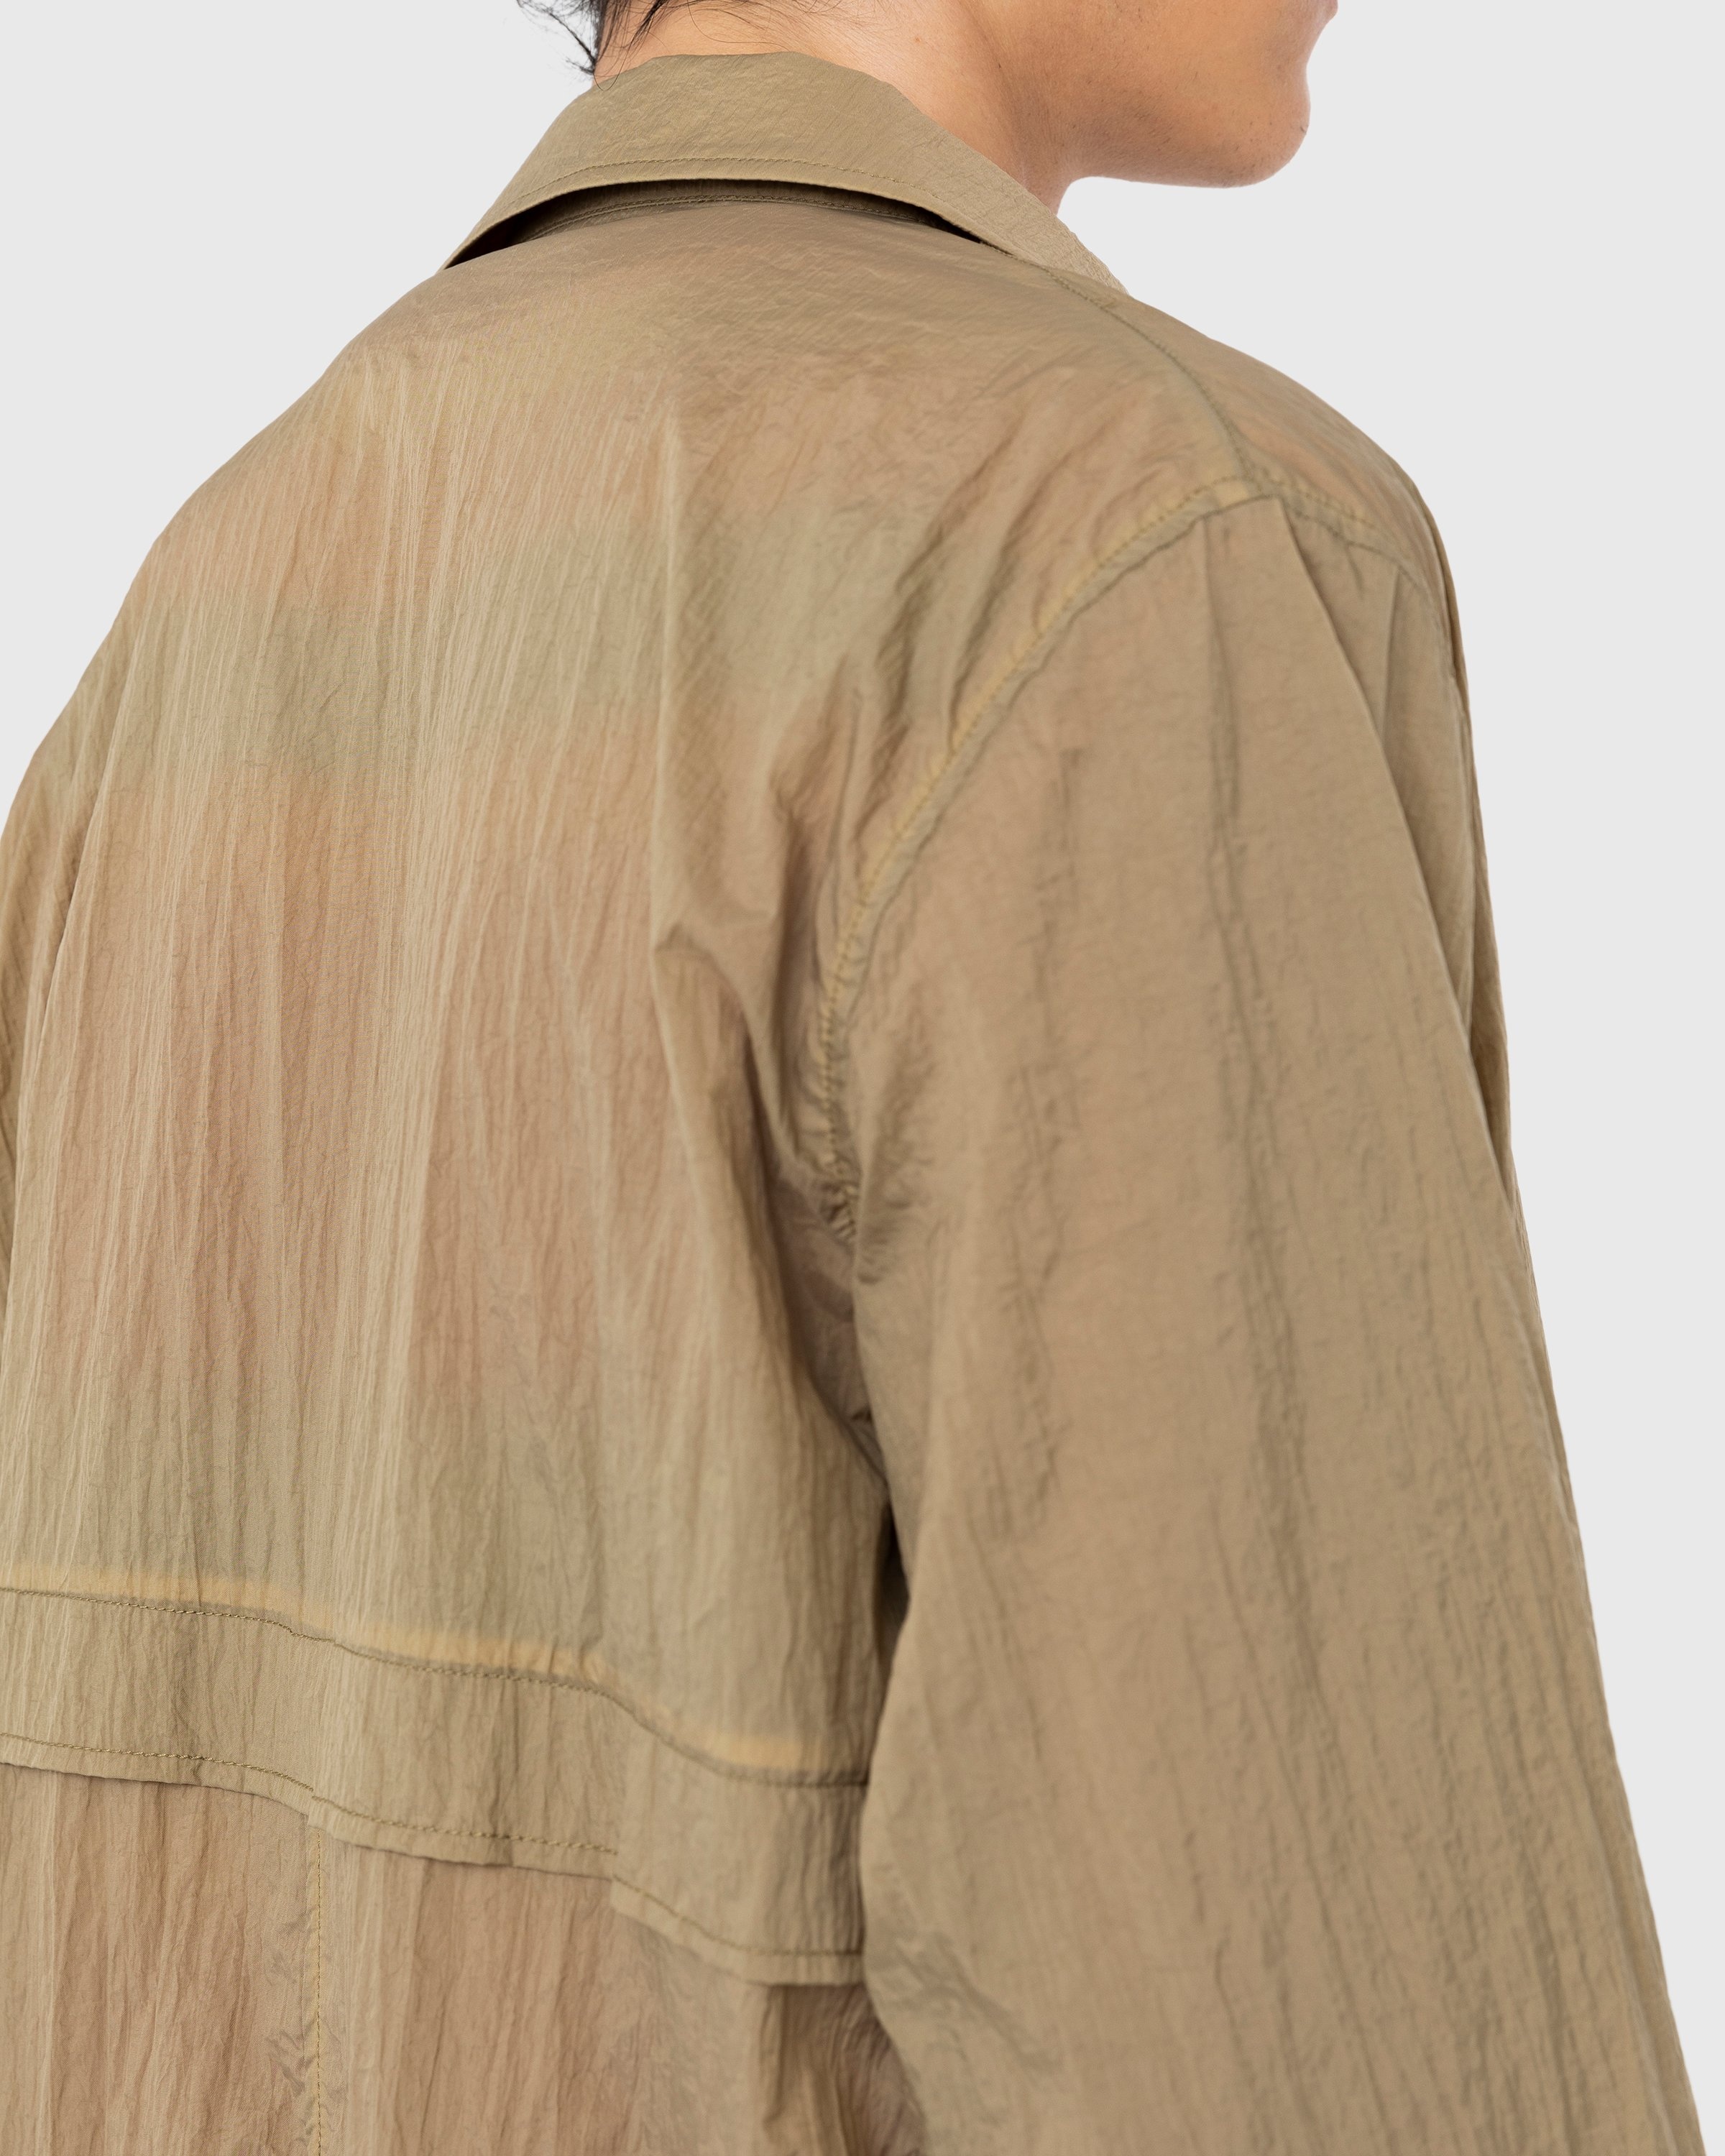 Highsnobiety – Crinkle Nylon Mac Camel - Outerwear - Beige - Image 6